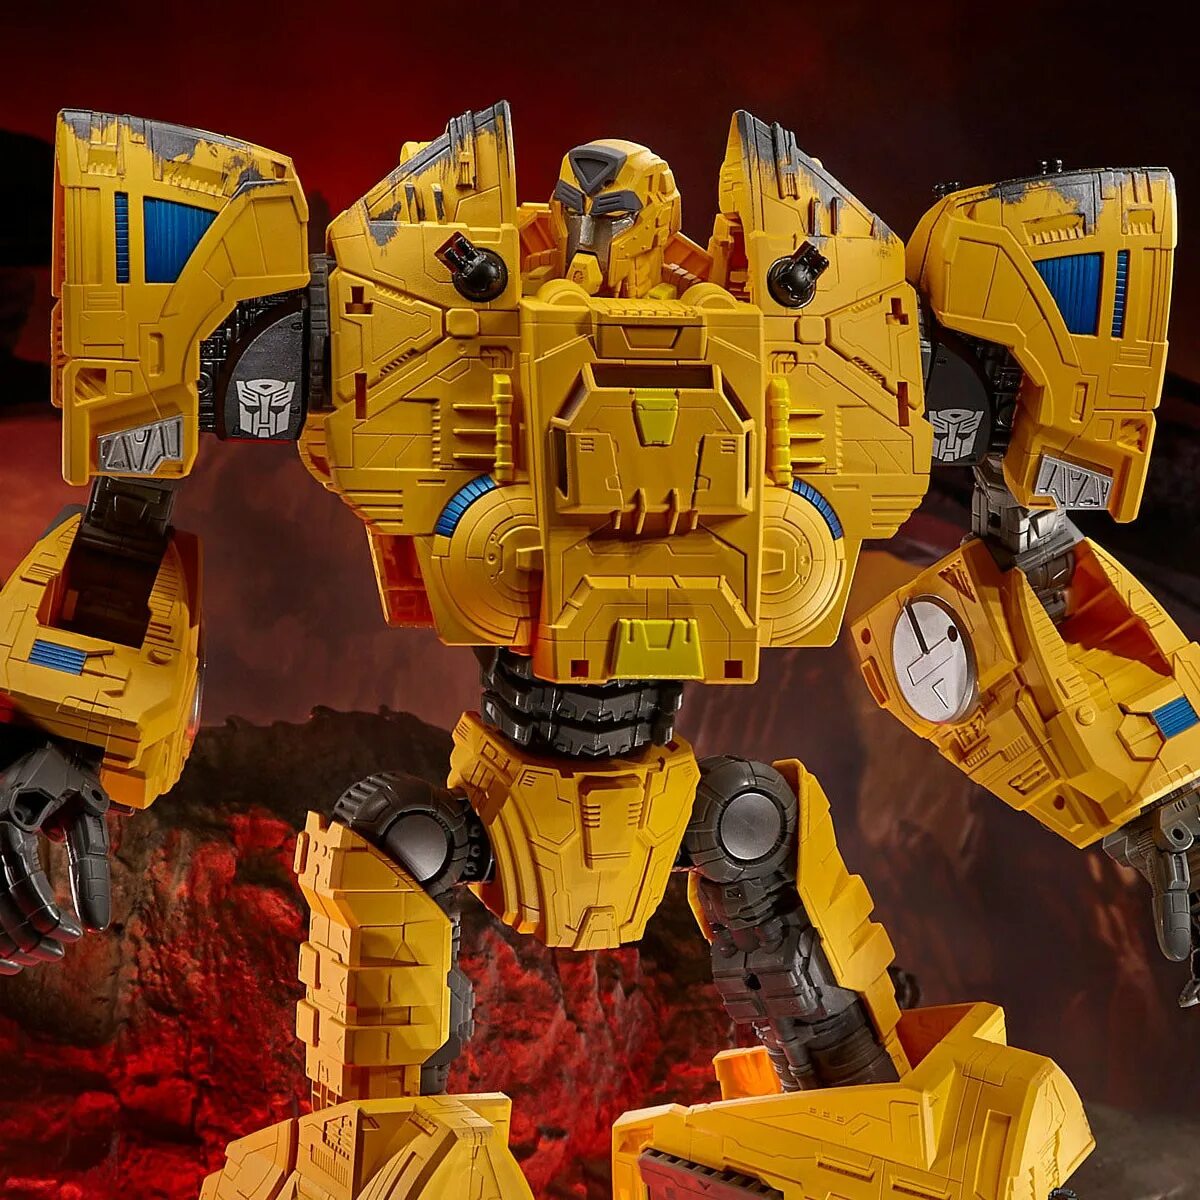 Transformers kingdom. Transformers WFC Kingdom фигурки. Transformers Kingdom WFC-k30 Autobot Ark - Titan. Телетран 1 трансформеры. Ковчег кингдом трансформеры.